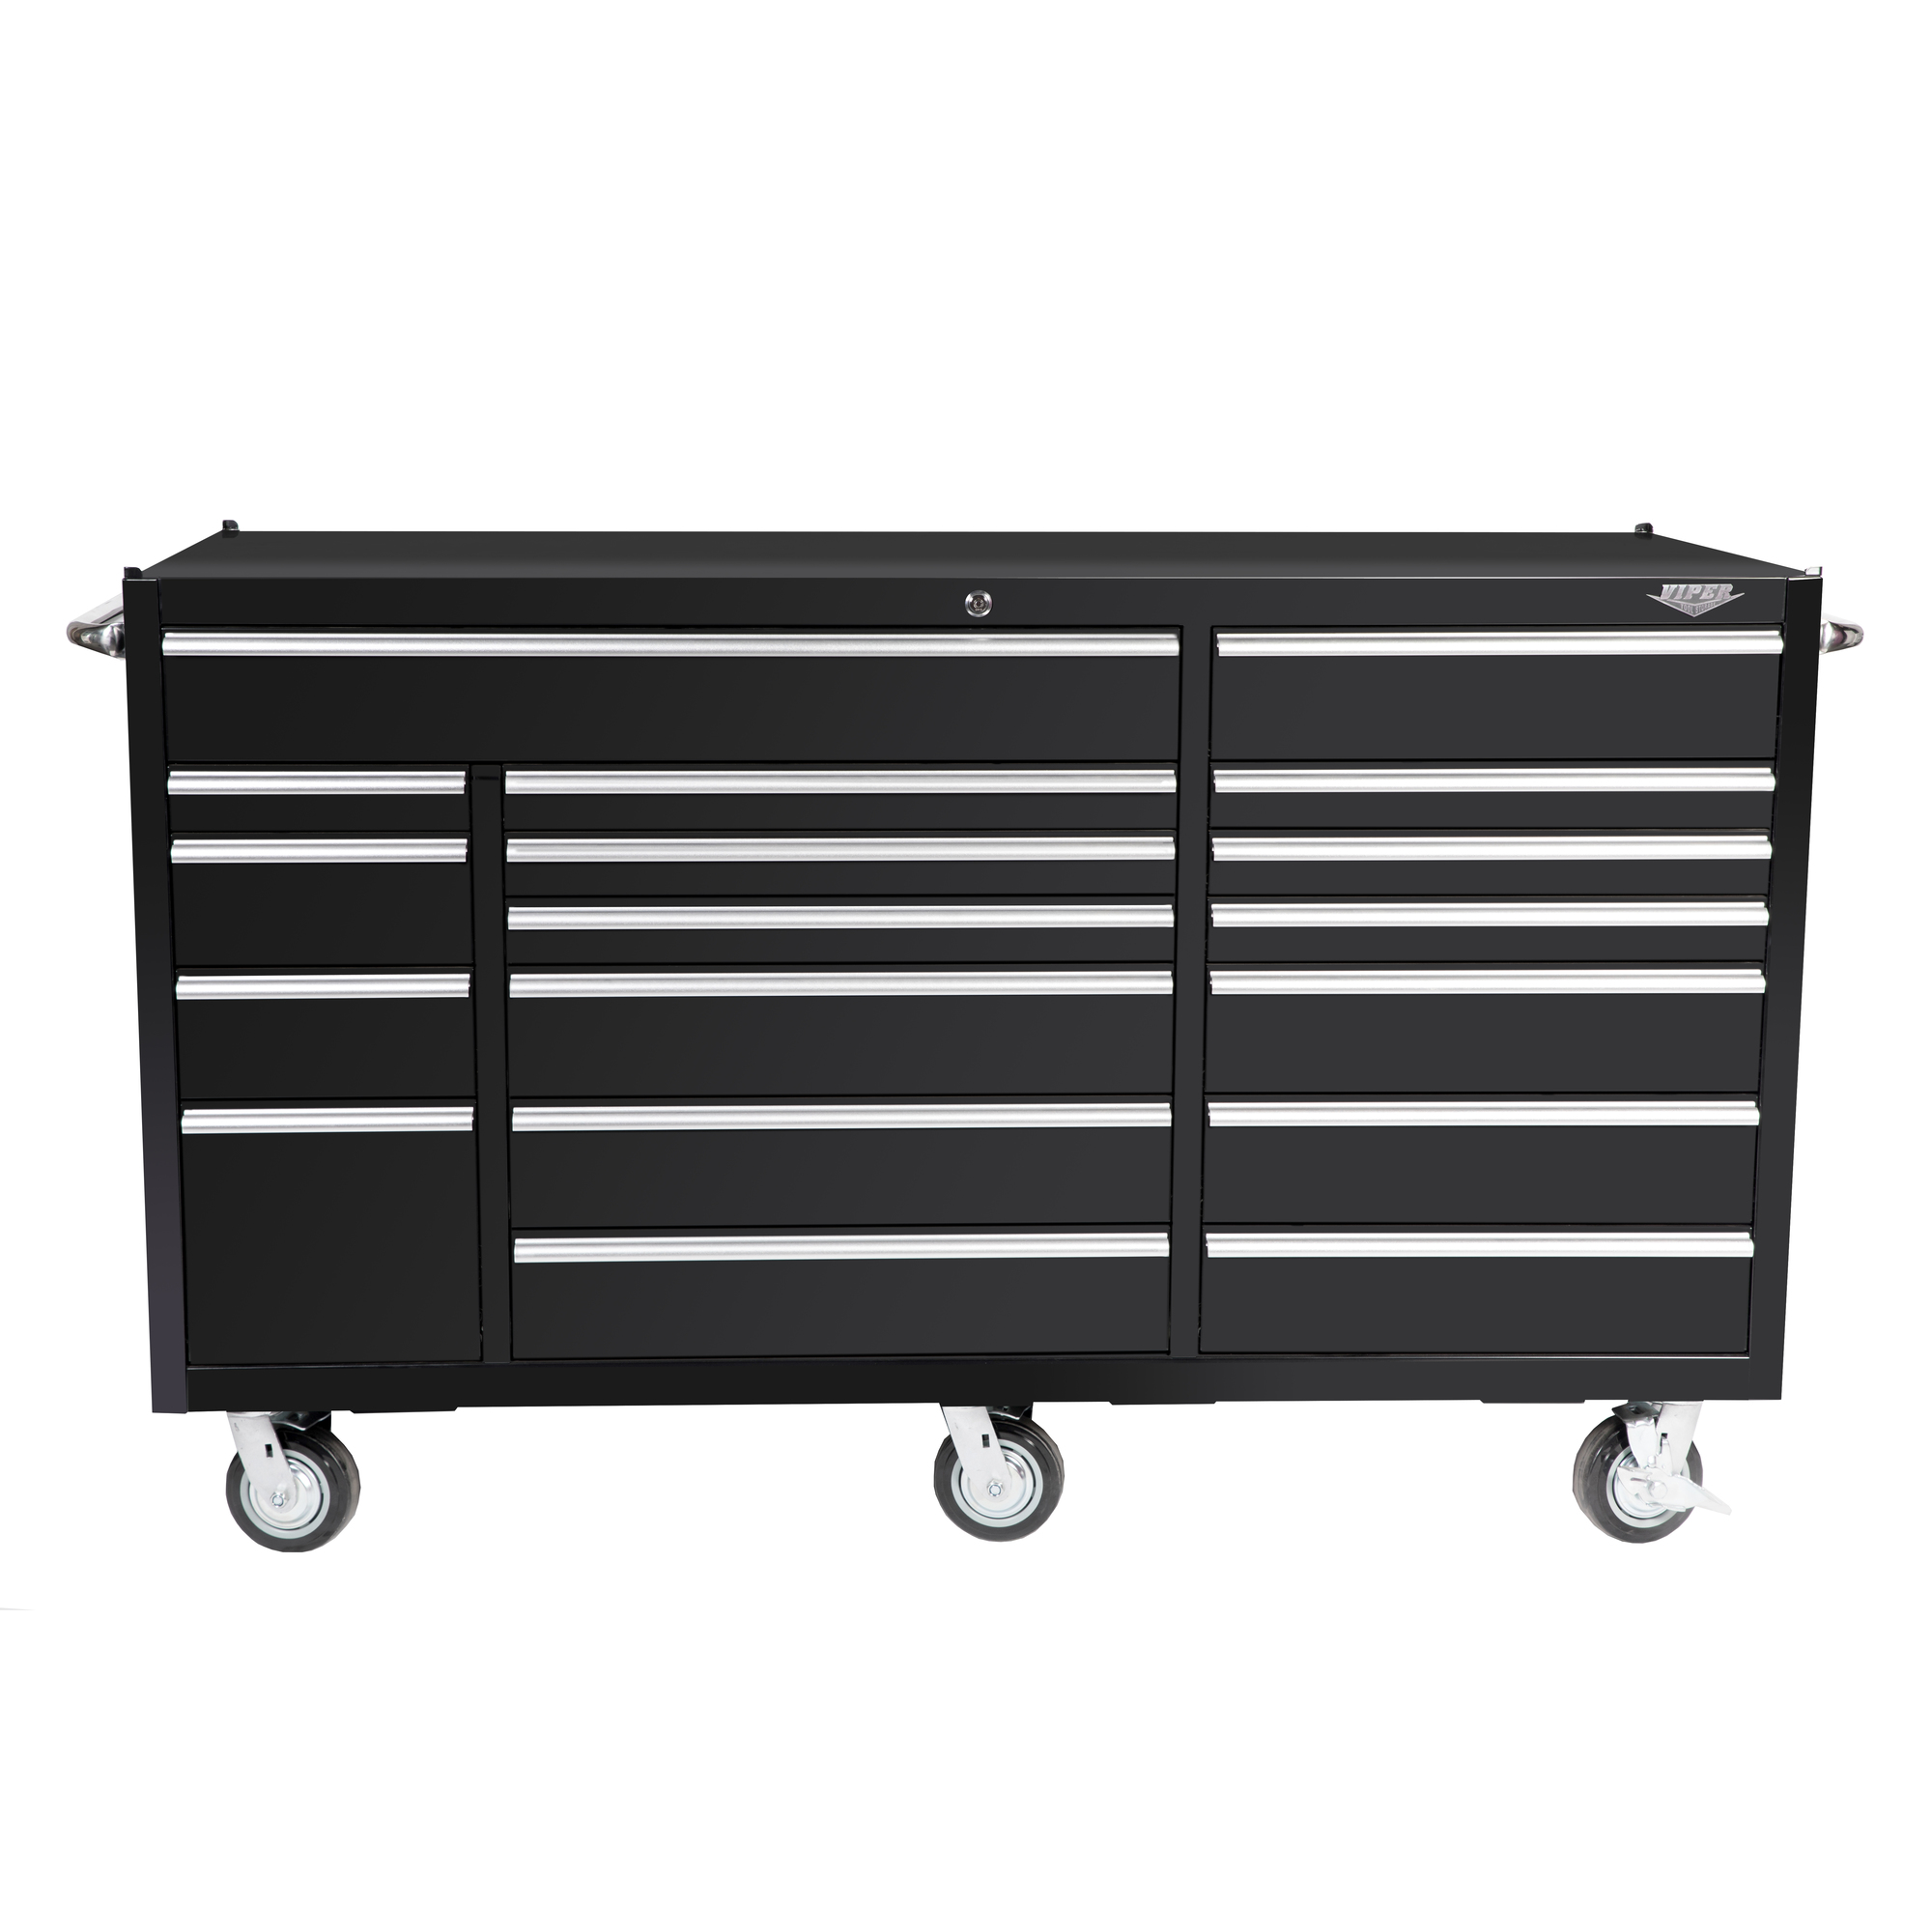 Viper Tool Storage, 18-Drawer Rolling Cabinet, Black, Width 72 in, Height 44.5 in, Color Black, Model VP7218BL